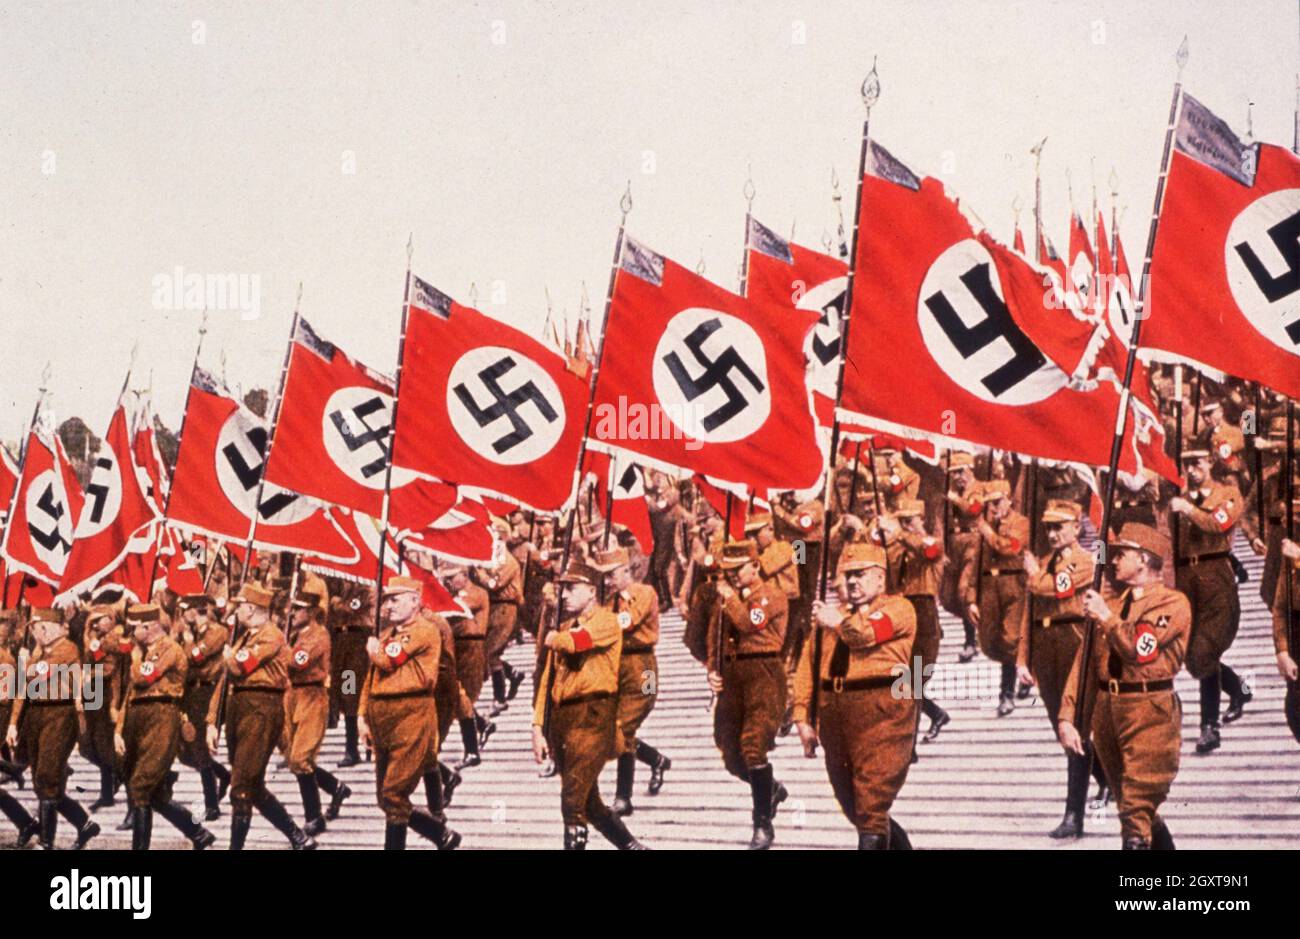 Nazi brownshirts carrying swastika banners at the Nuremberg Rally Stock Photo